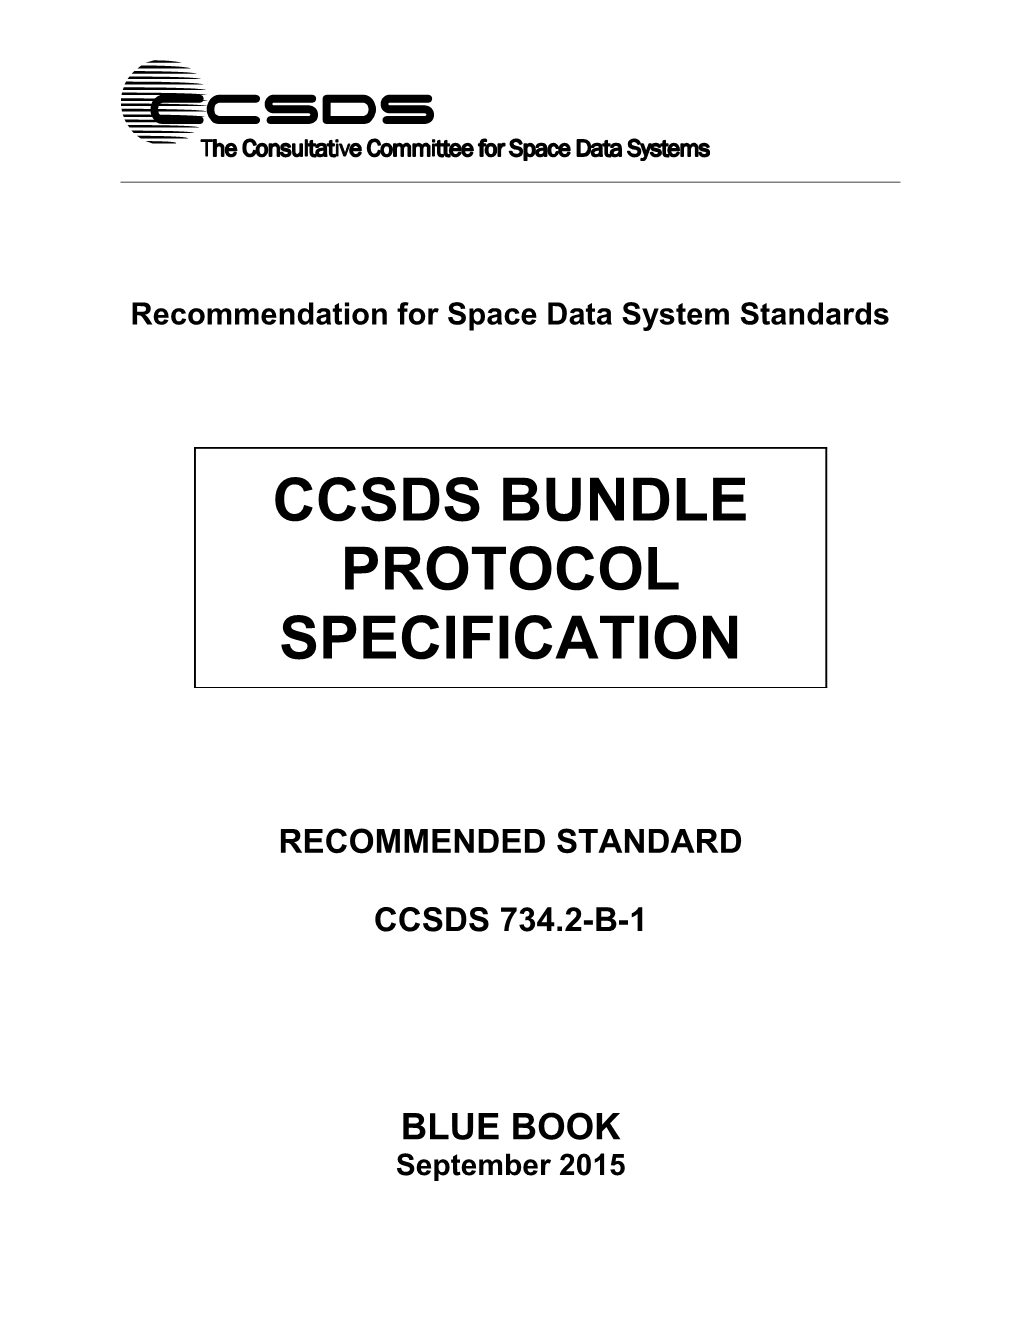 CCSDS Bundle Protocol Specification